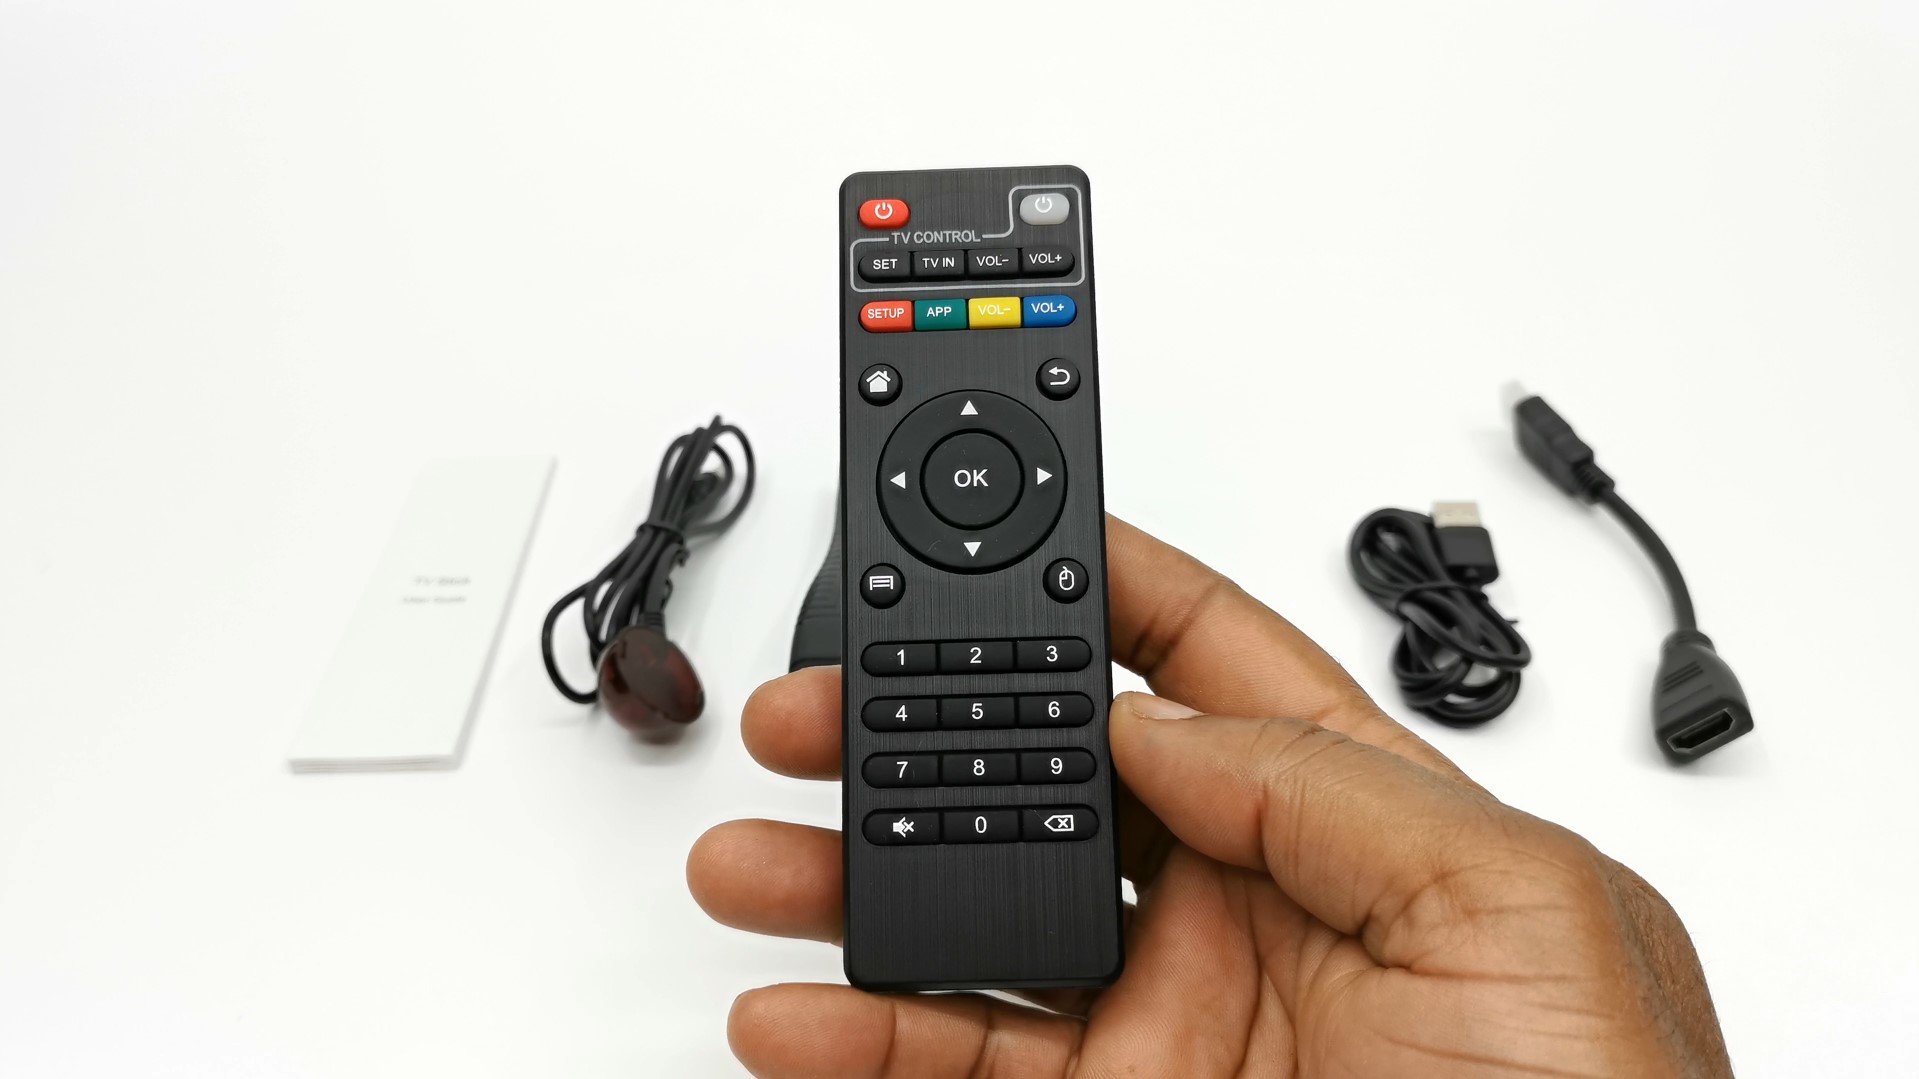 TOX2 TV Stick Infrared remote control